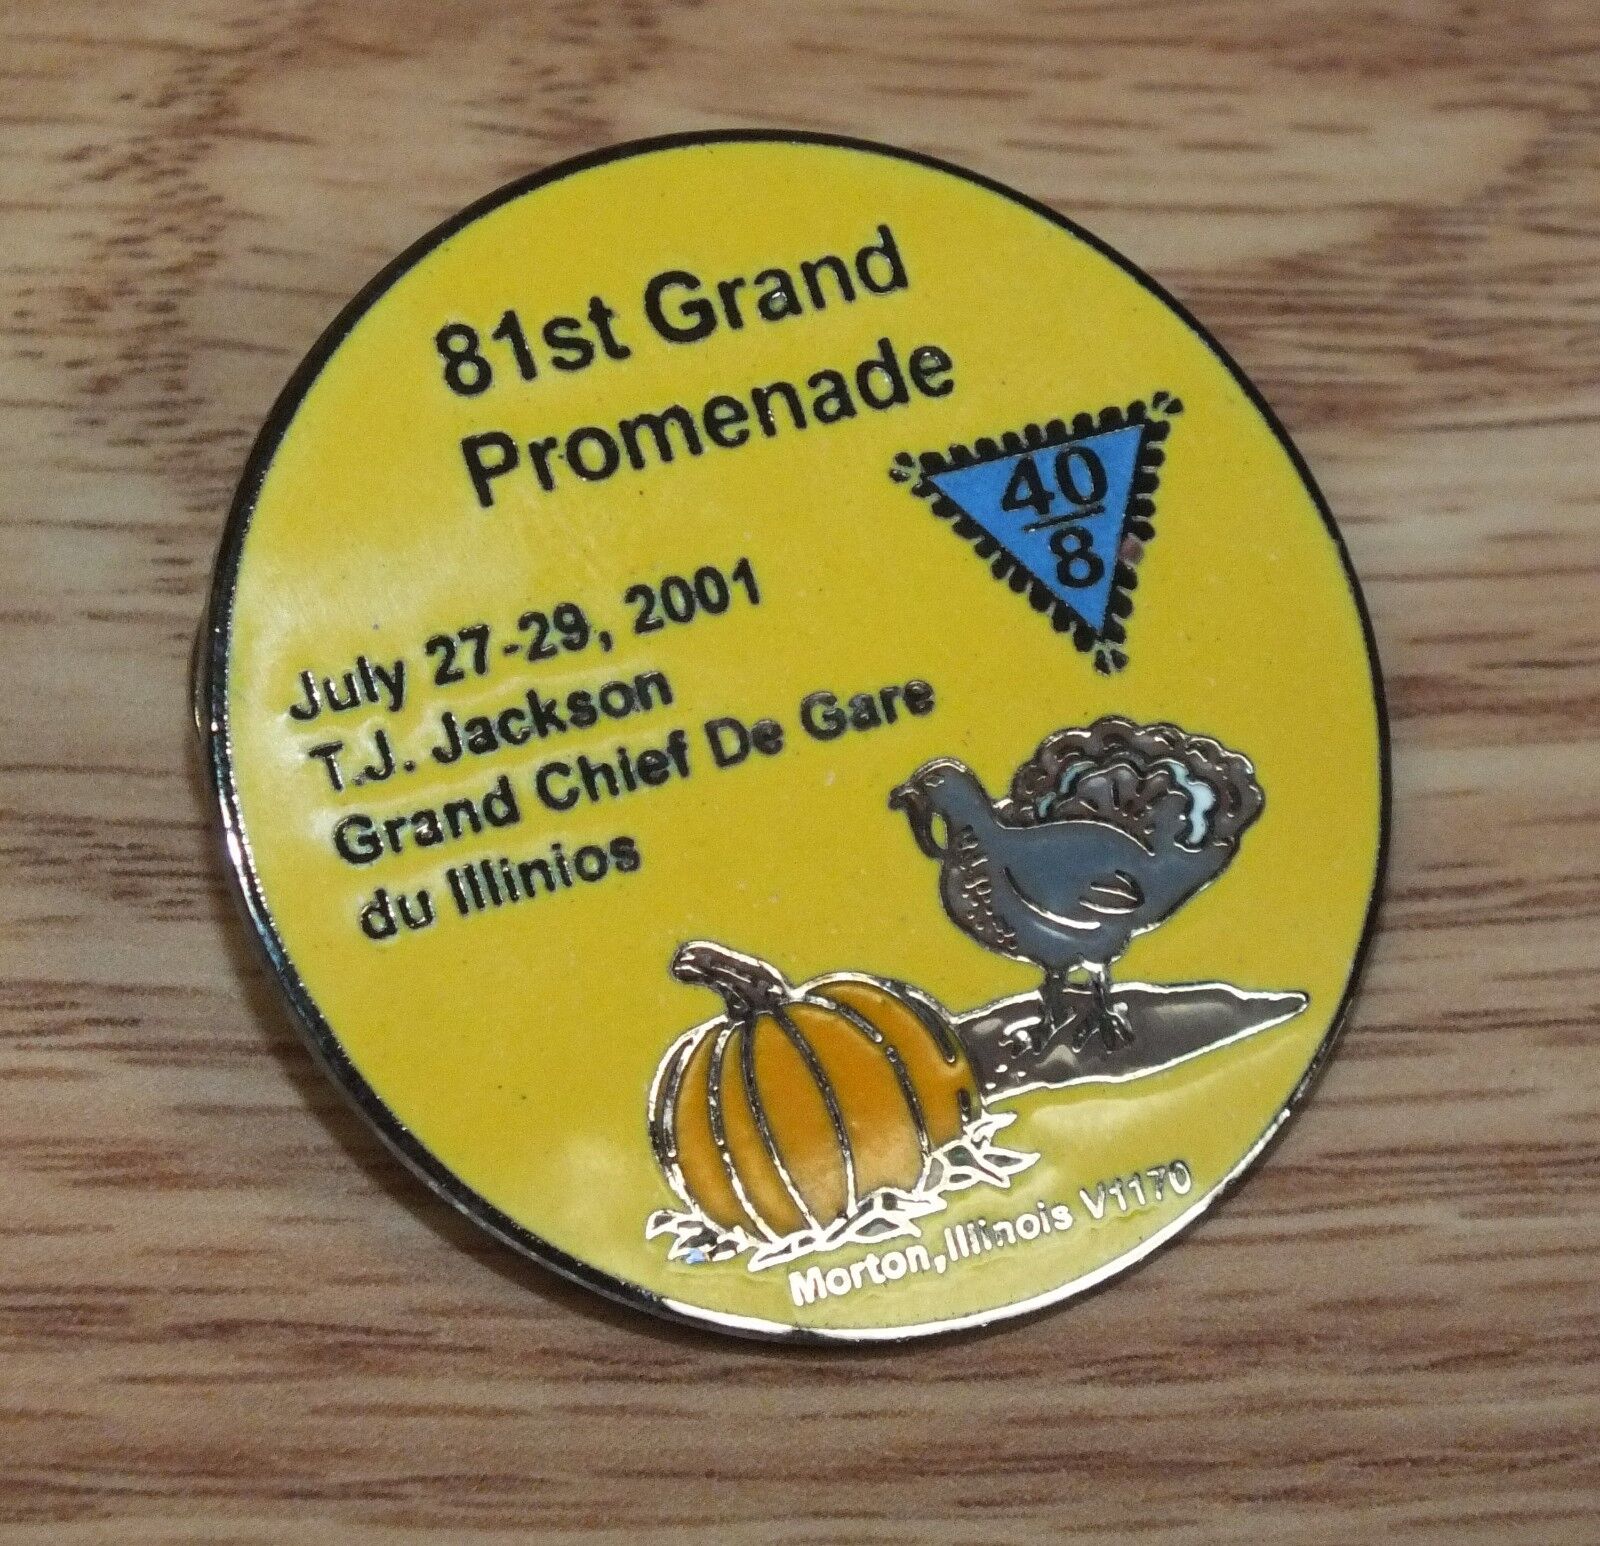 81st Grand Promenade July 27-29, 2001 T.J Jackson Grand Chief Illinois Pin 